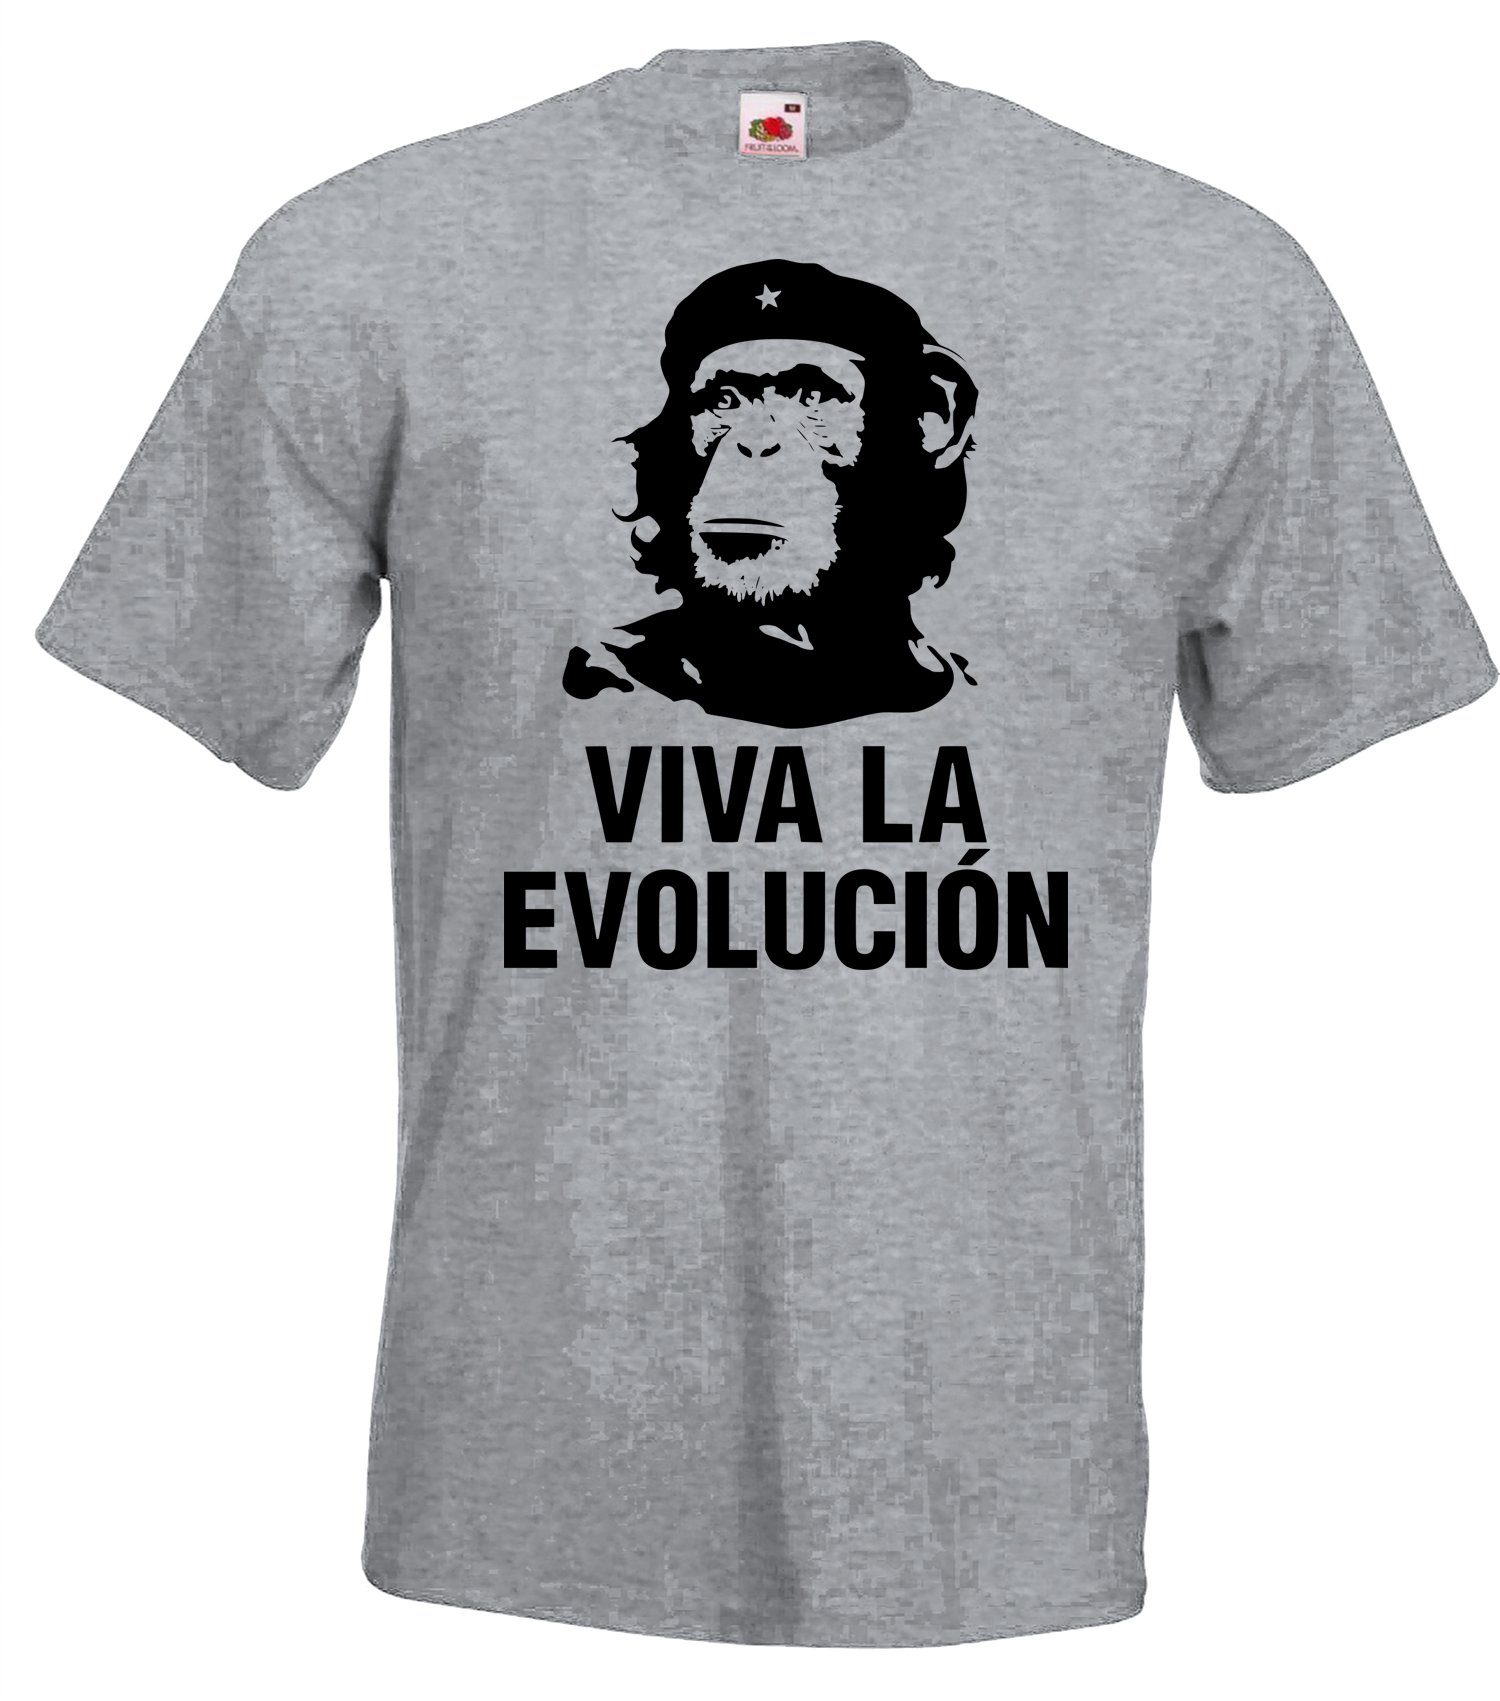 Youth Designz T-Shirt Viva la Evolucion Herren Fun T-Shirt mit trendigem Frontdruck Grau